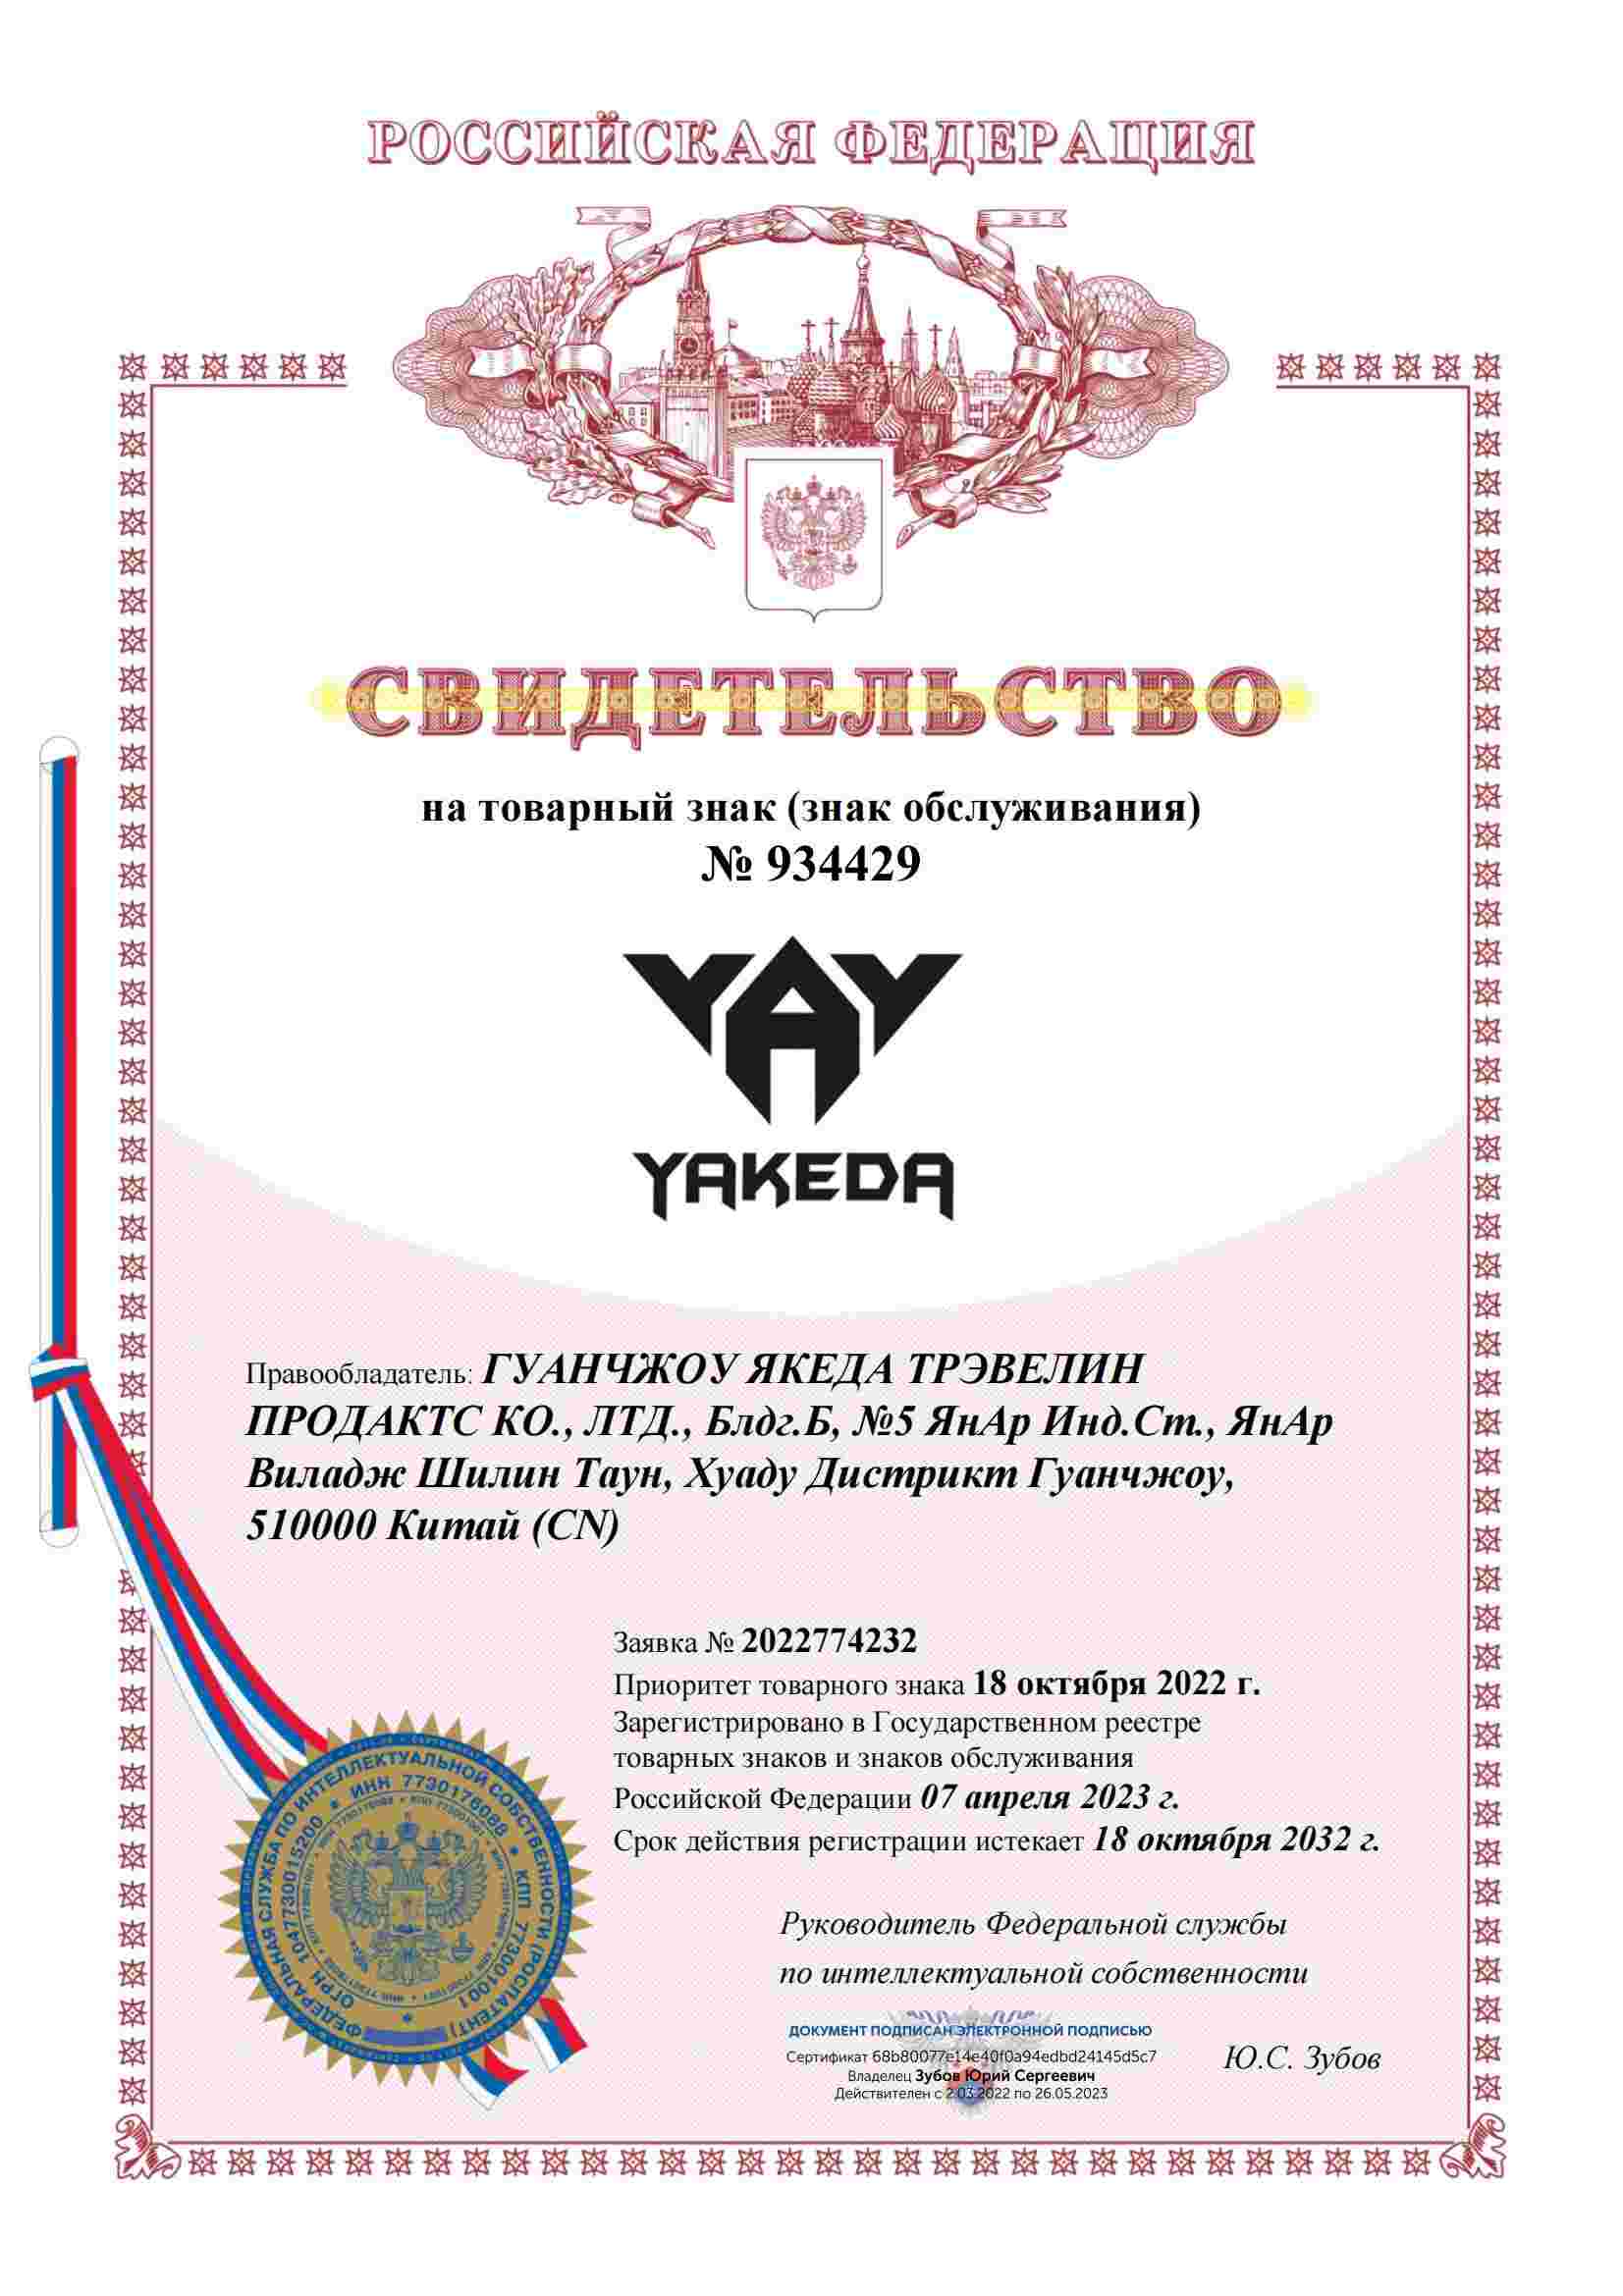 Russia Trademark Certificate